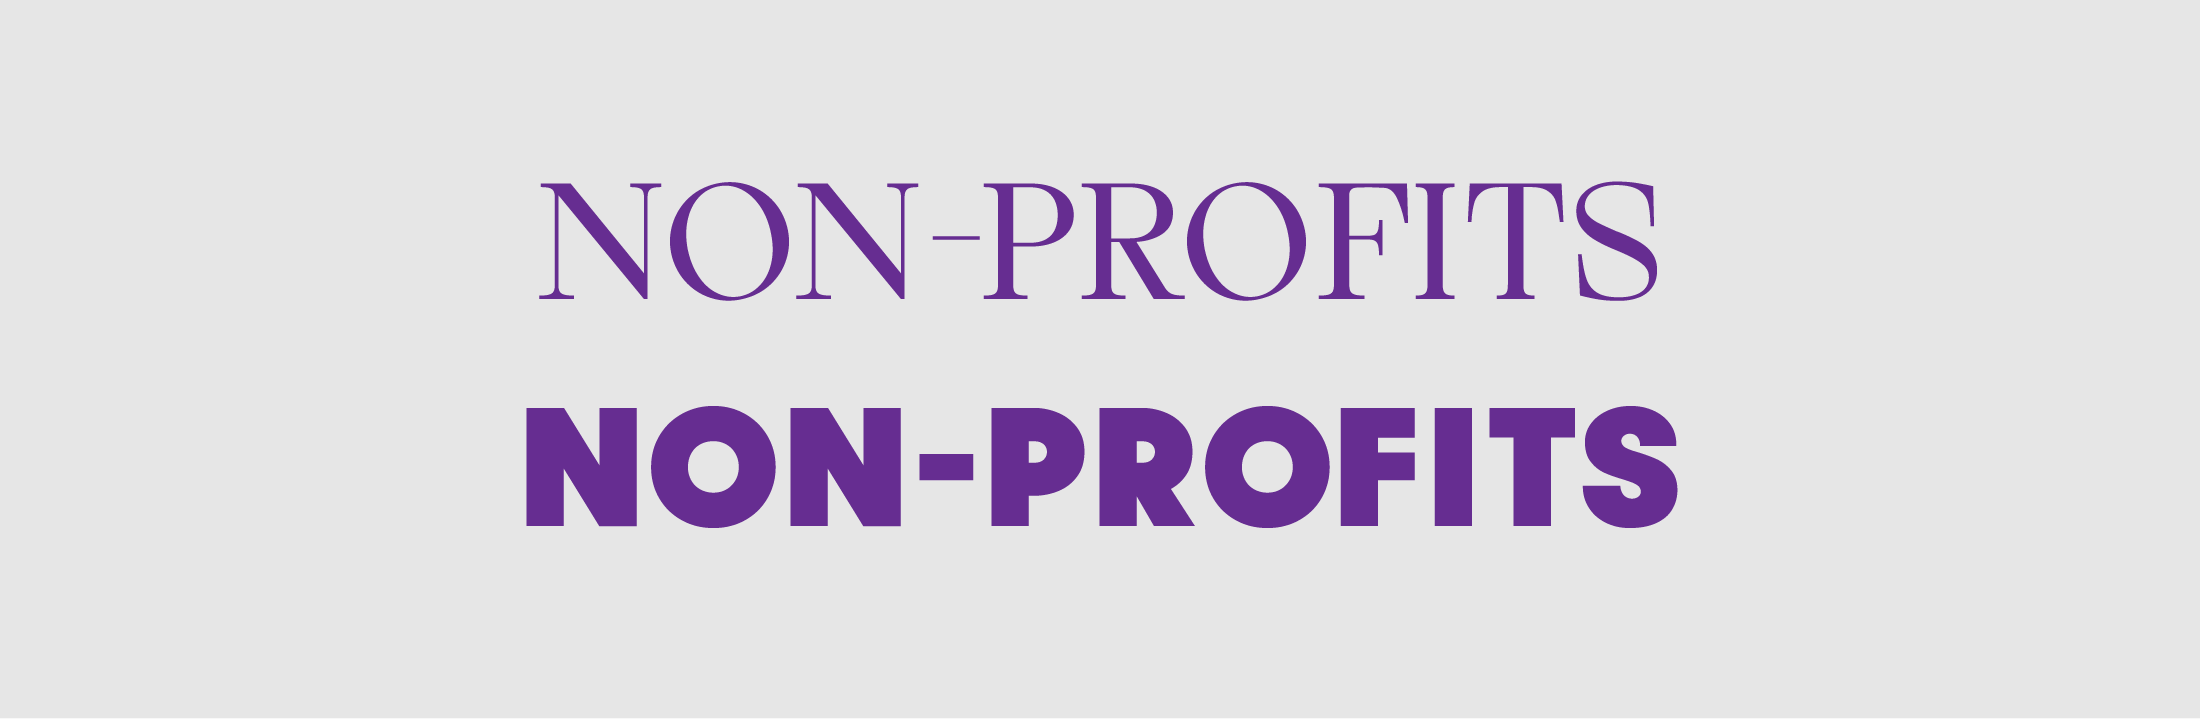 fonts for nonprofit logo designs